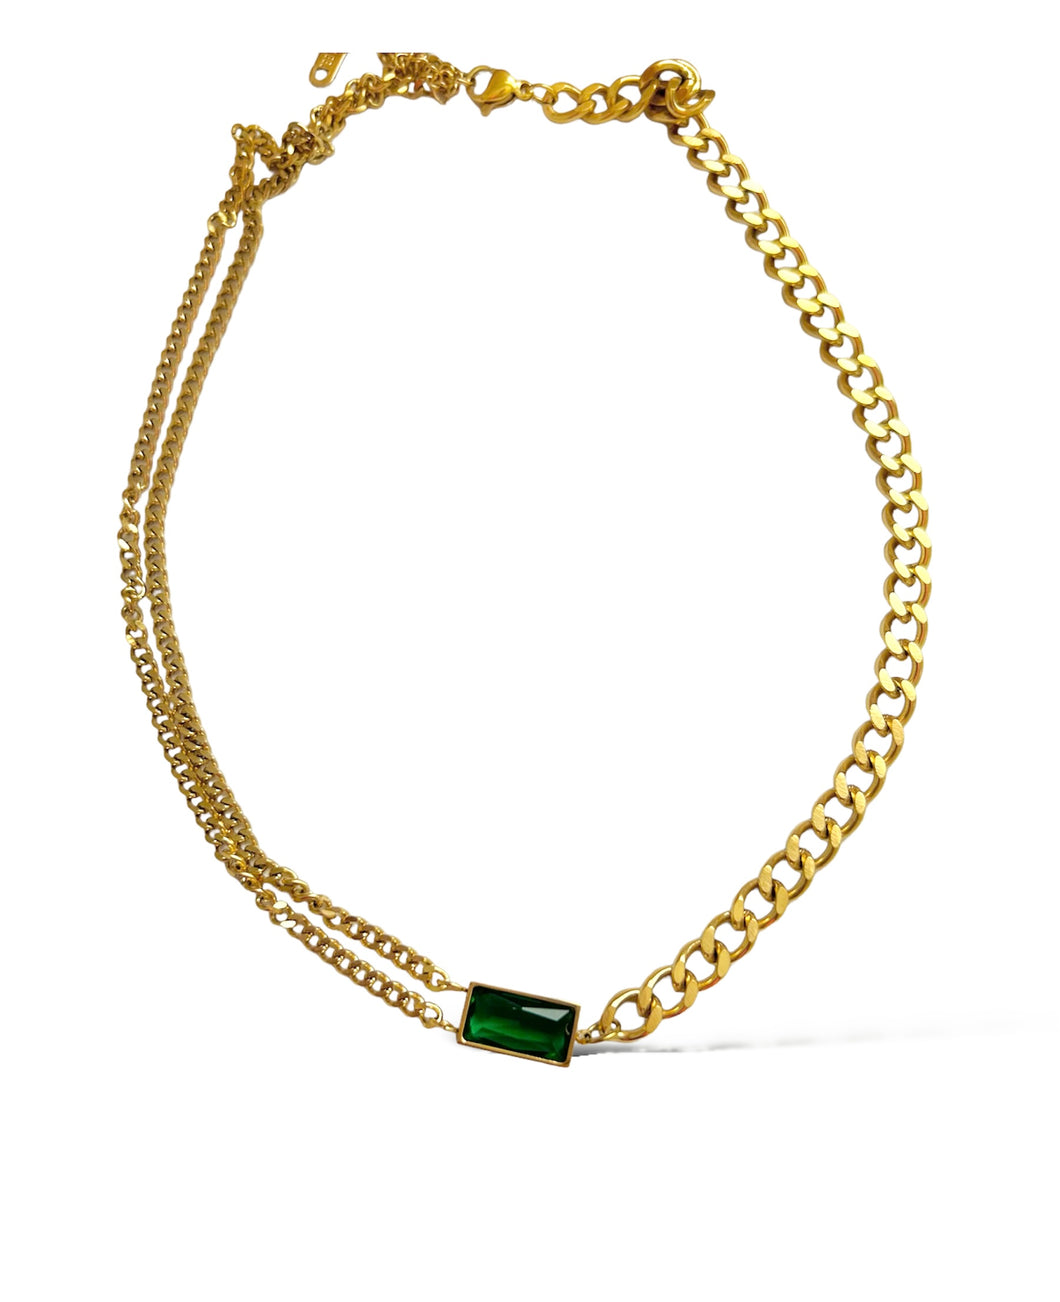 Green Esperanza necklace